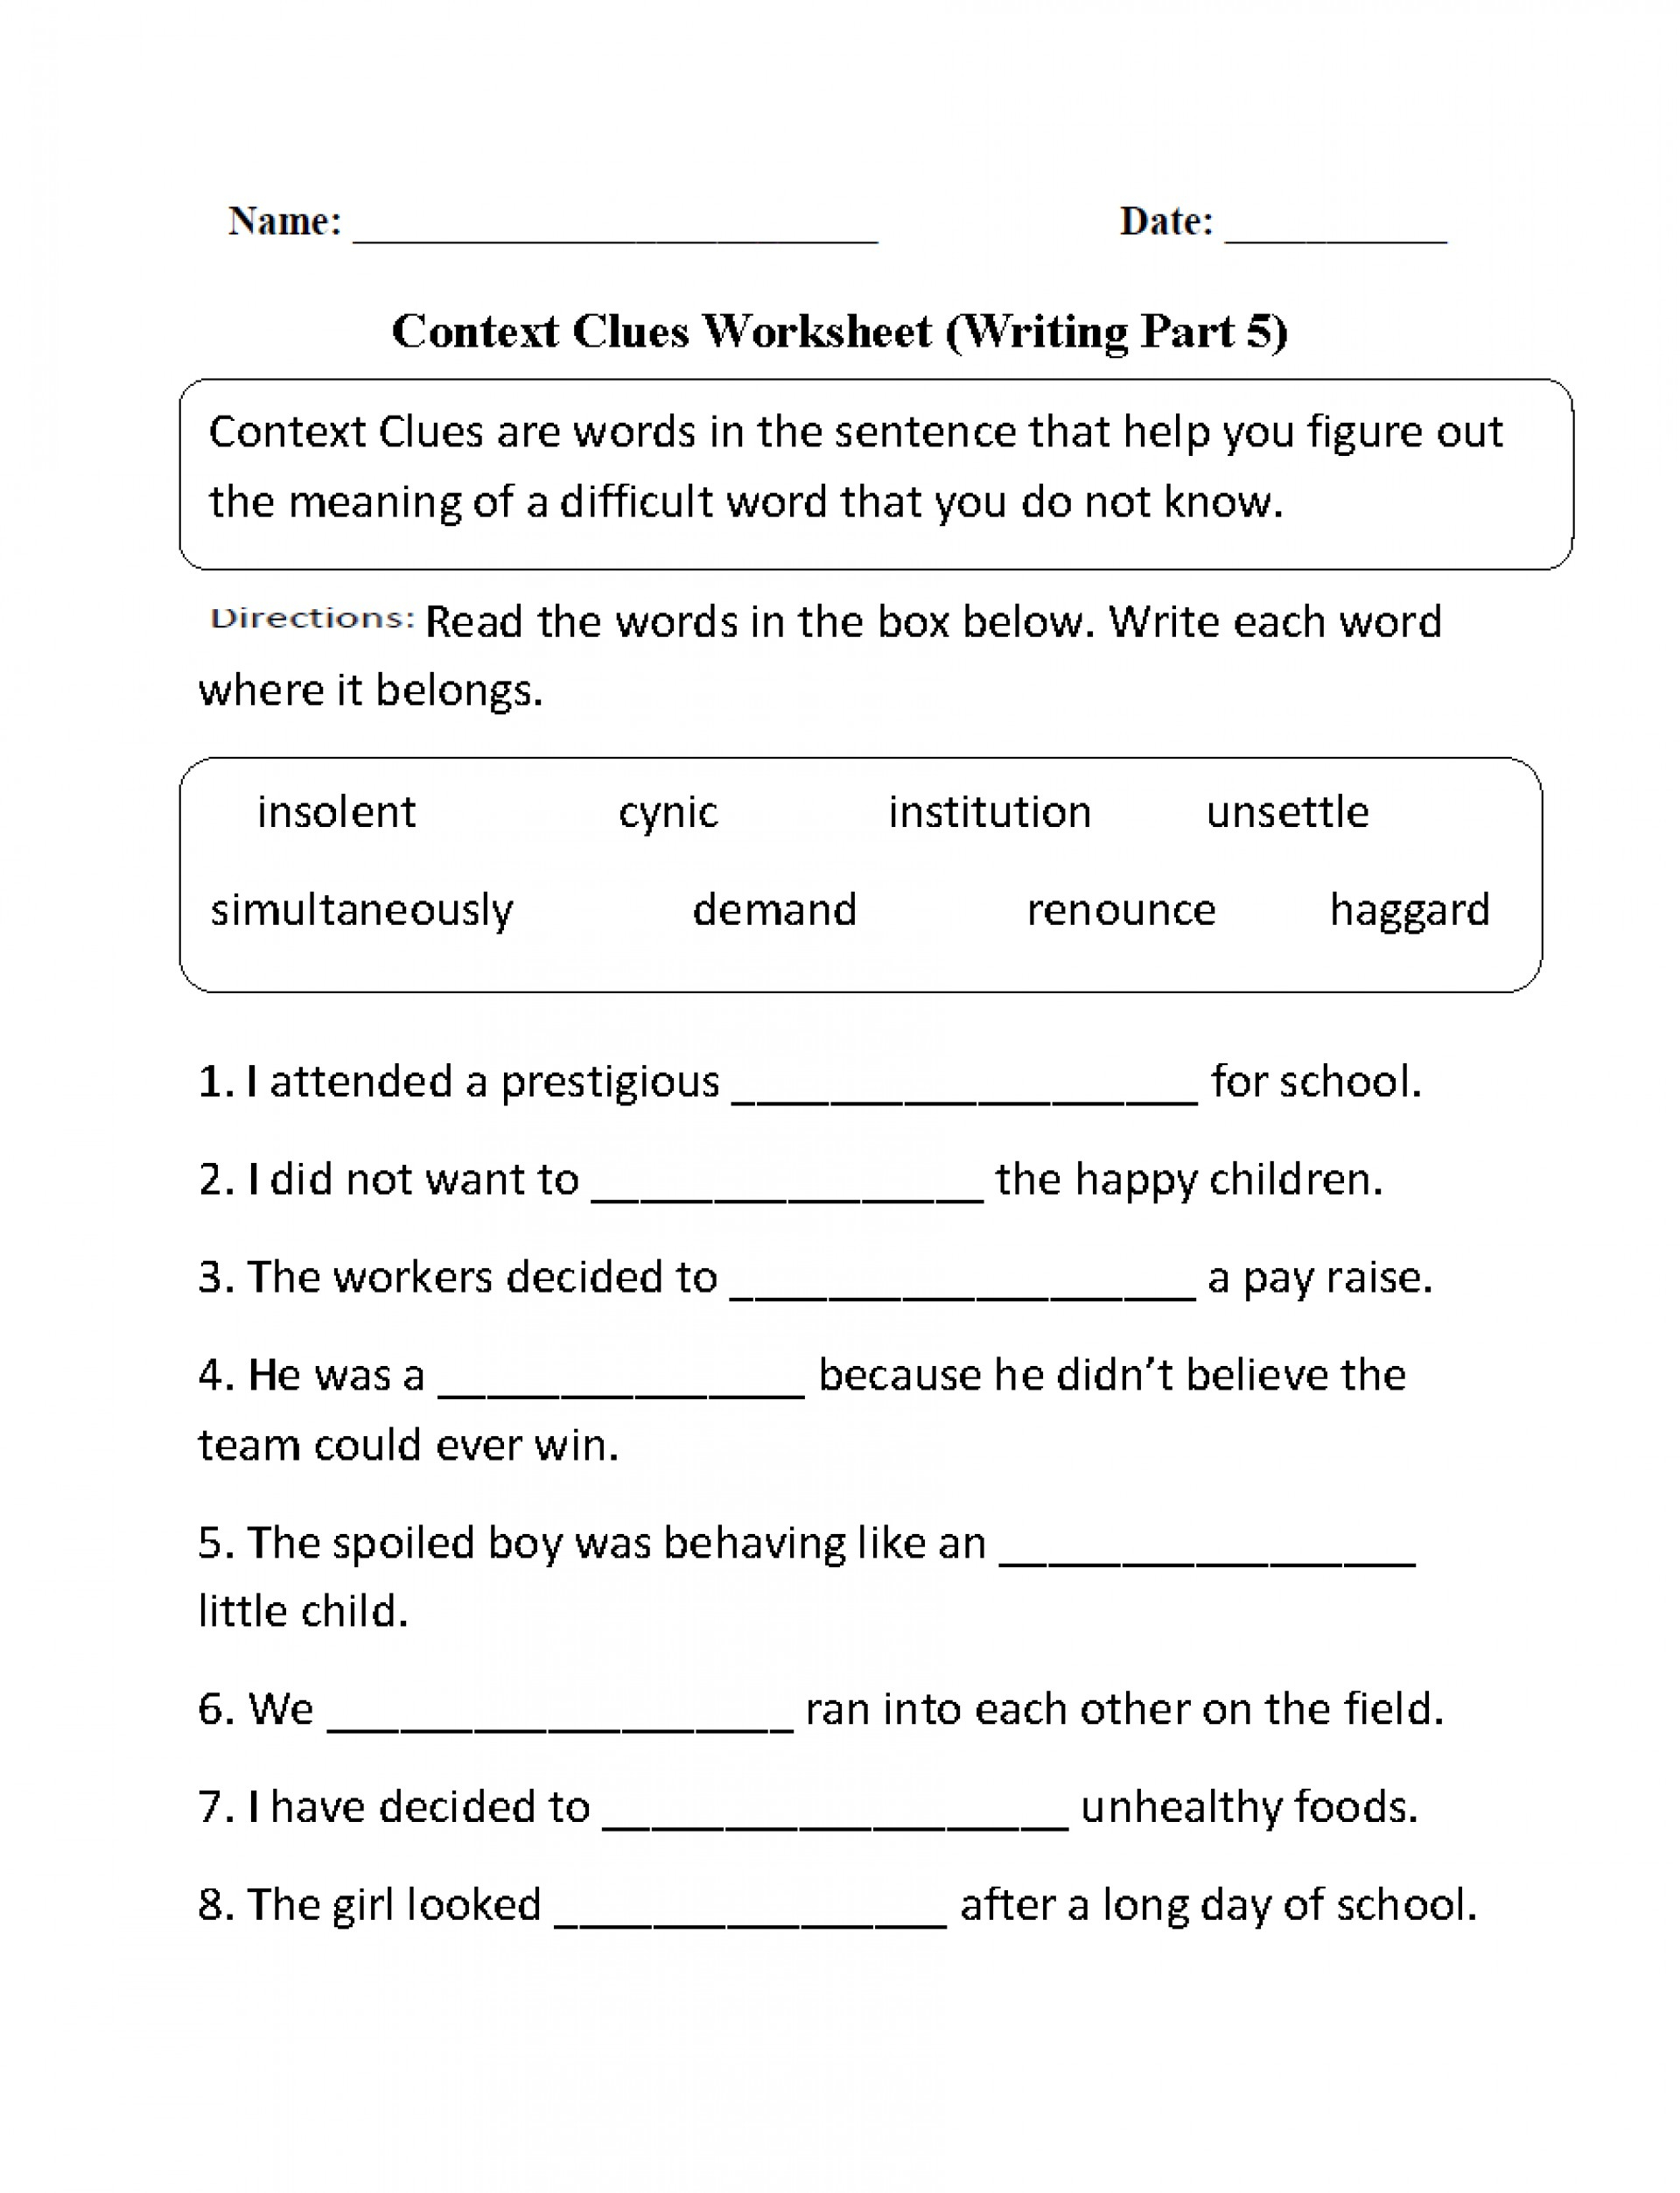 multiple-meaning-words-worksheets-free-printable